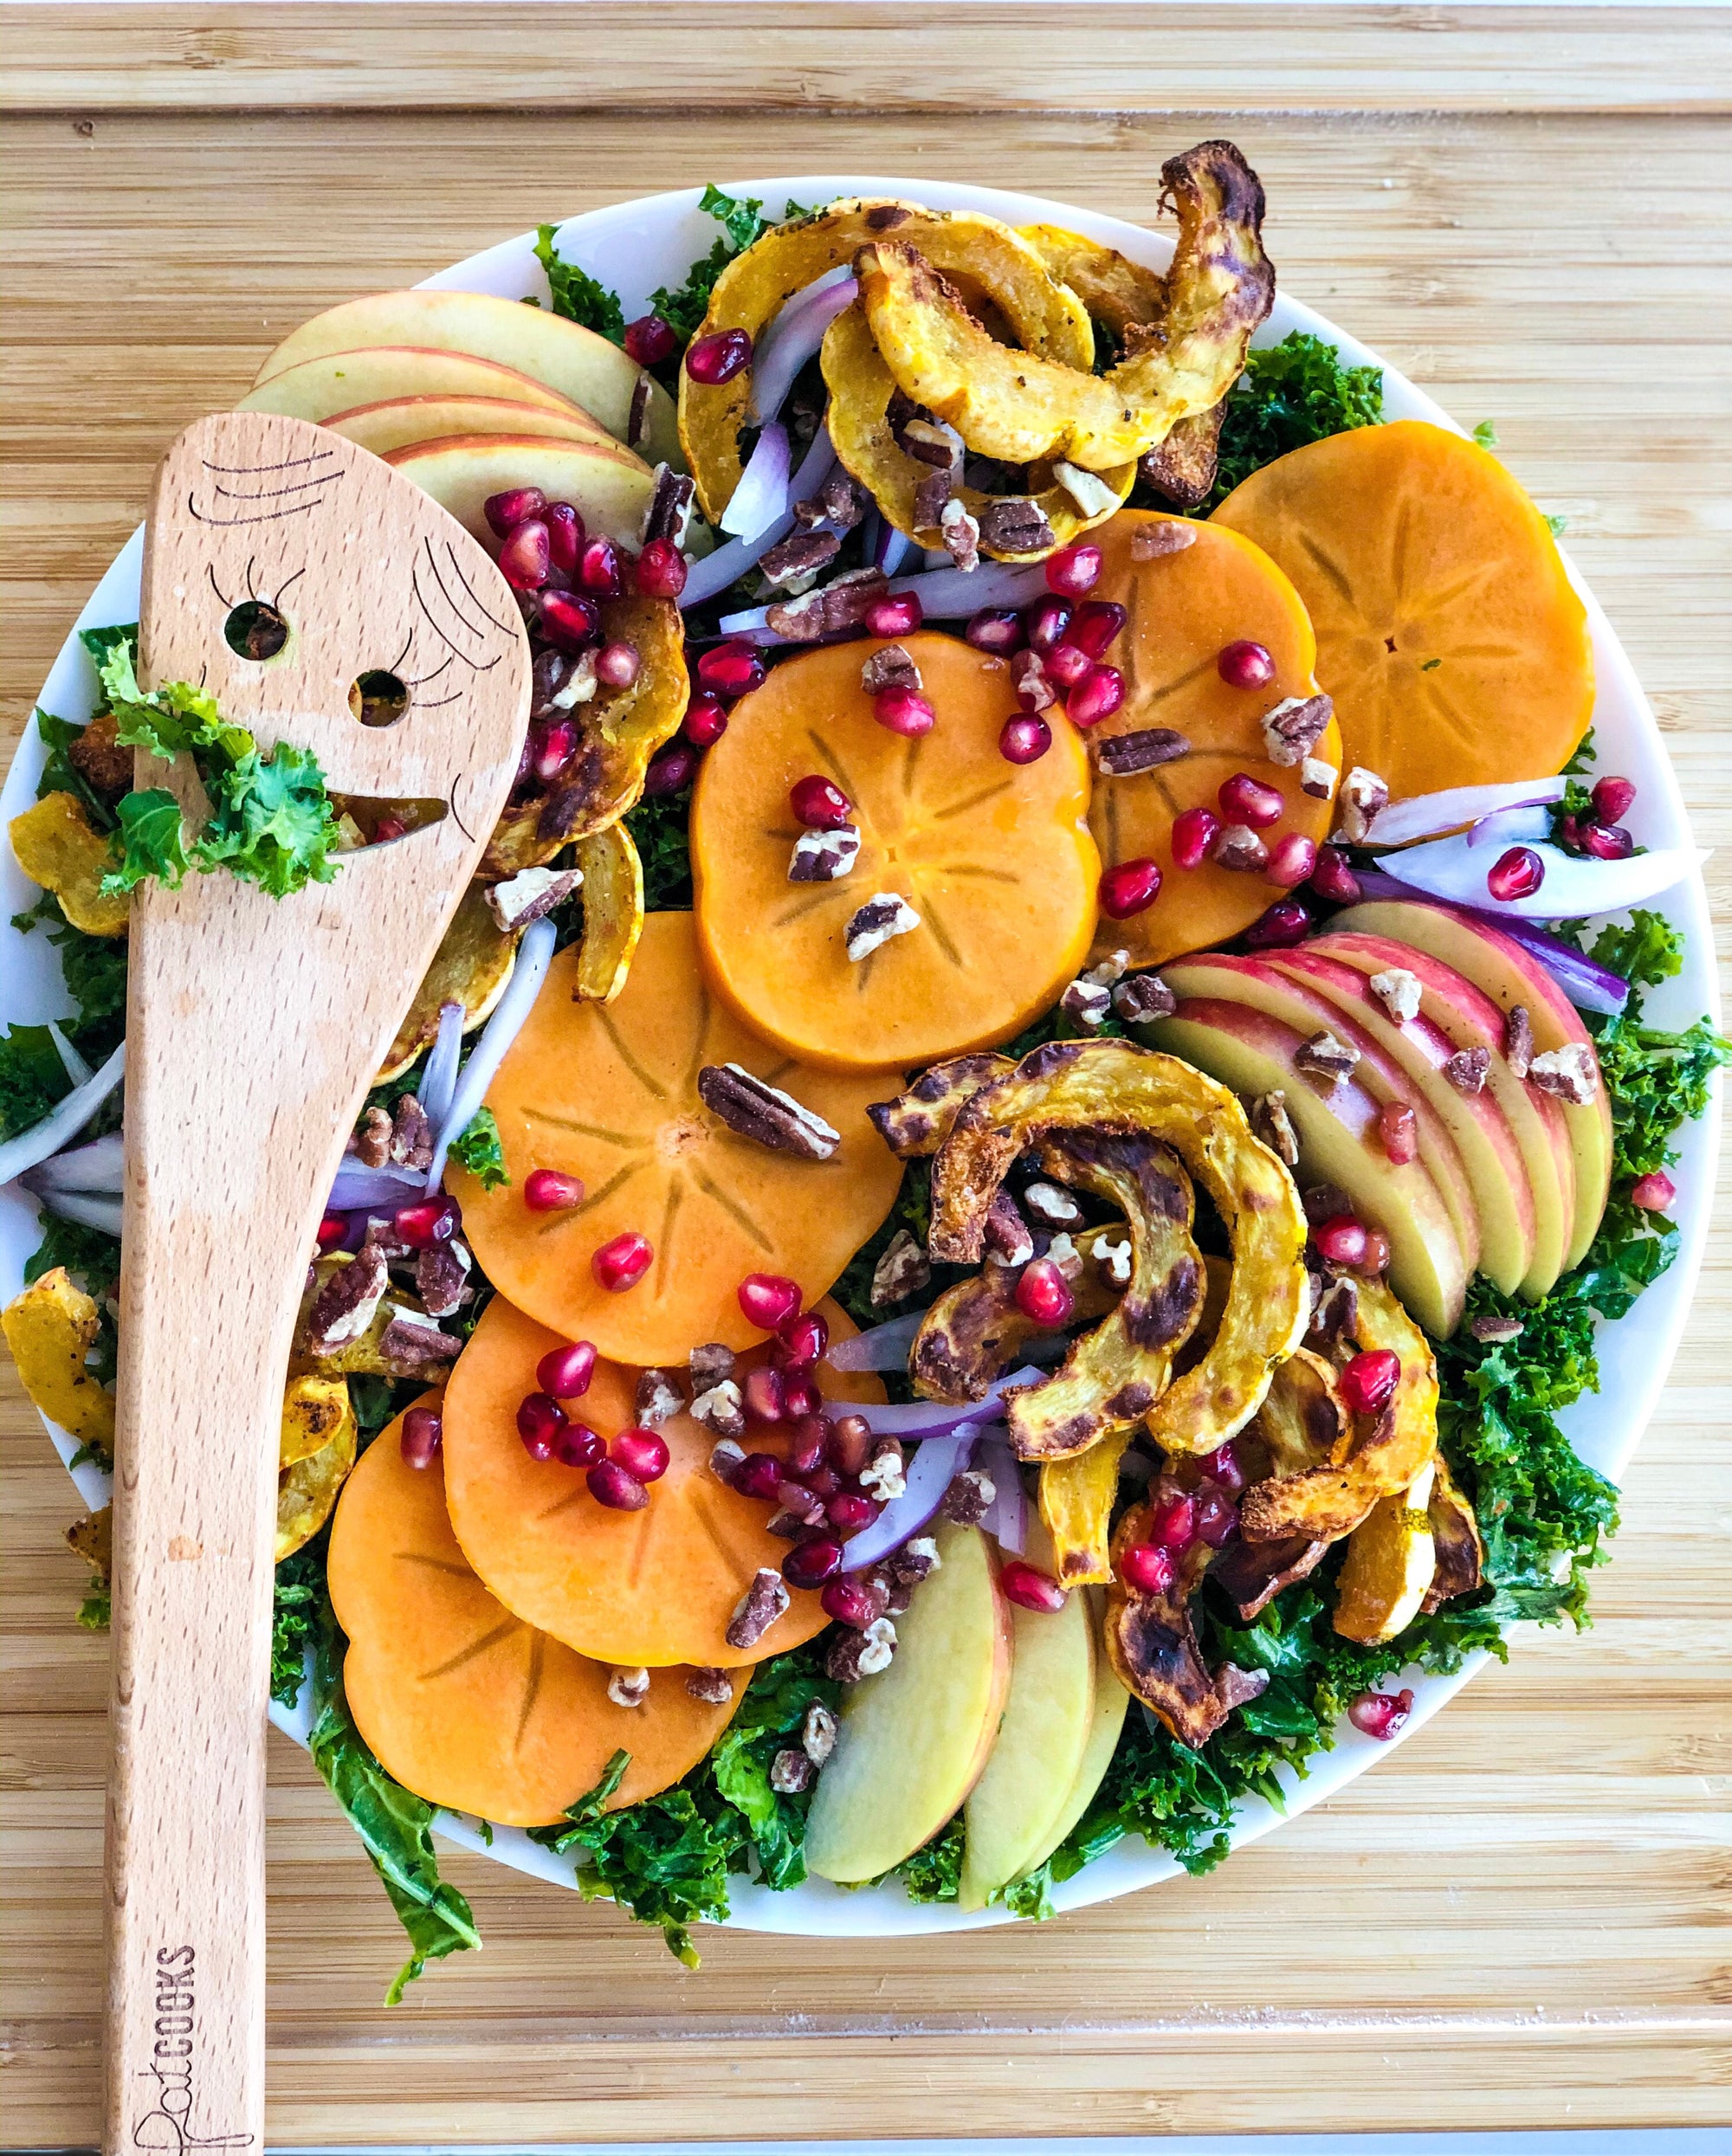 Kale Salad with Roasted Delicata Squash & Fall Fruits